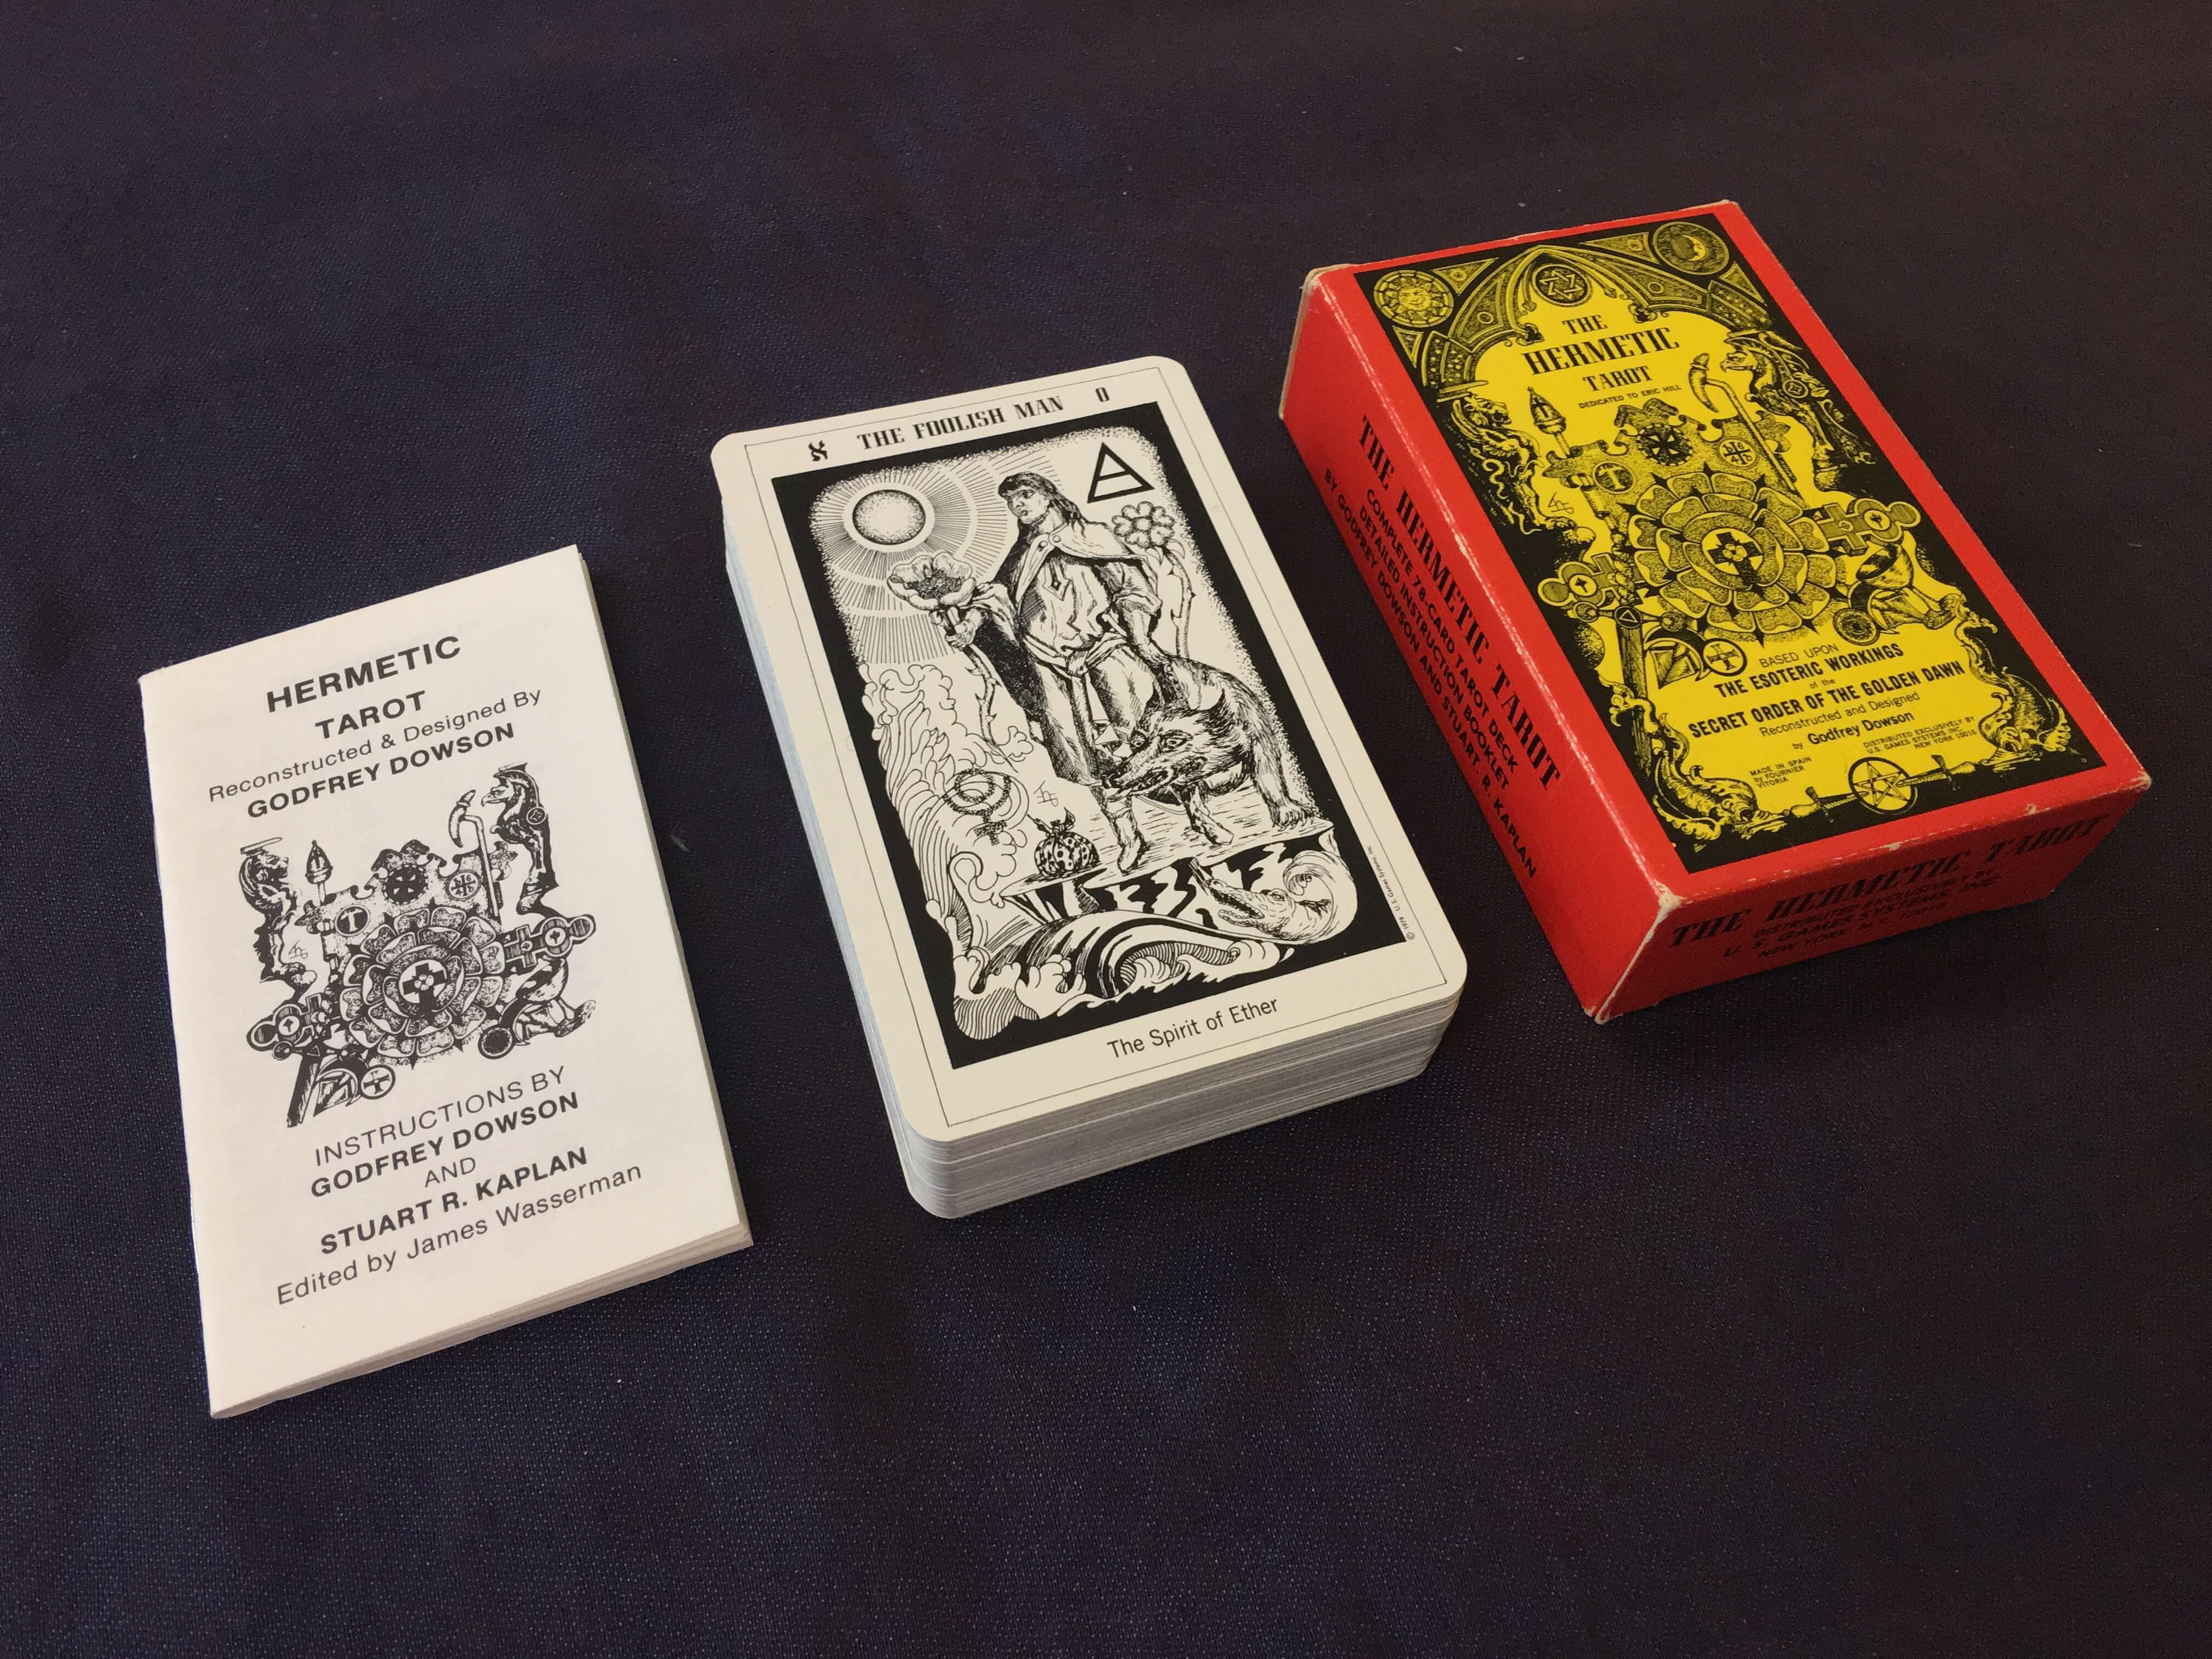 The Hermetic Tarot Cards